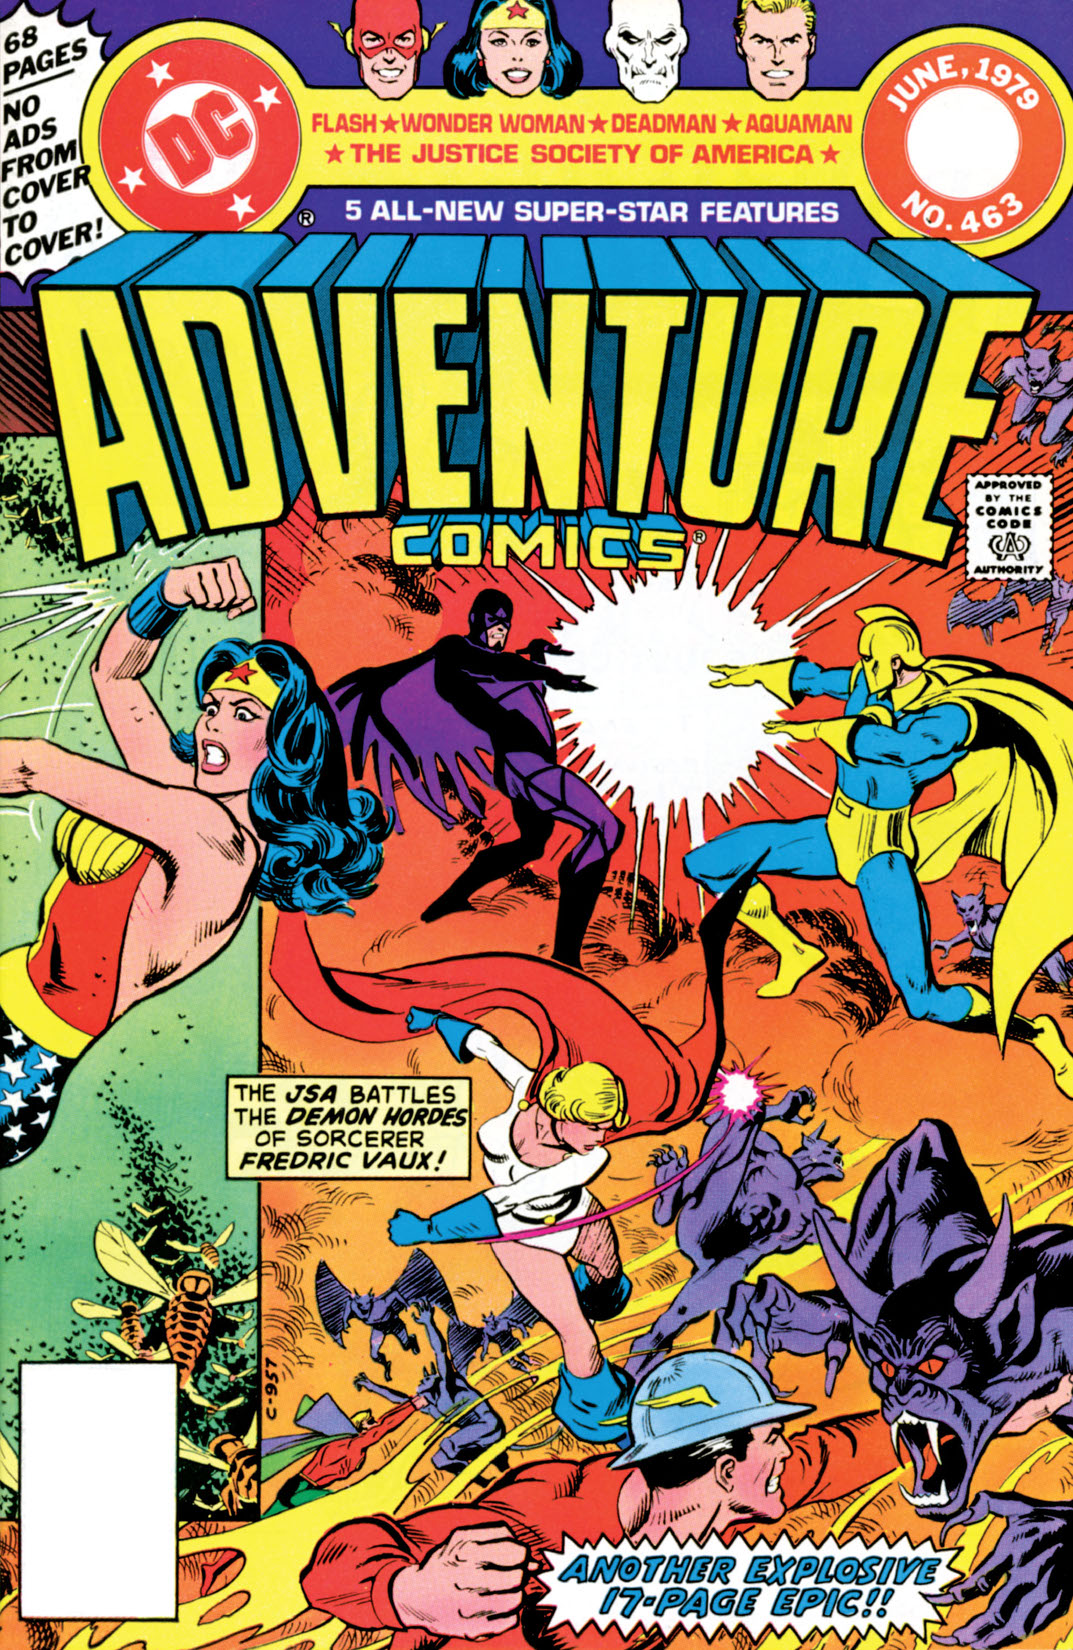 Adventure Comics (1938-) #463 preview images